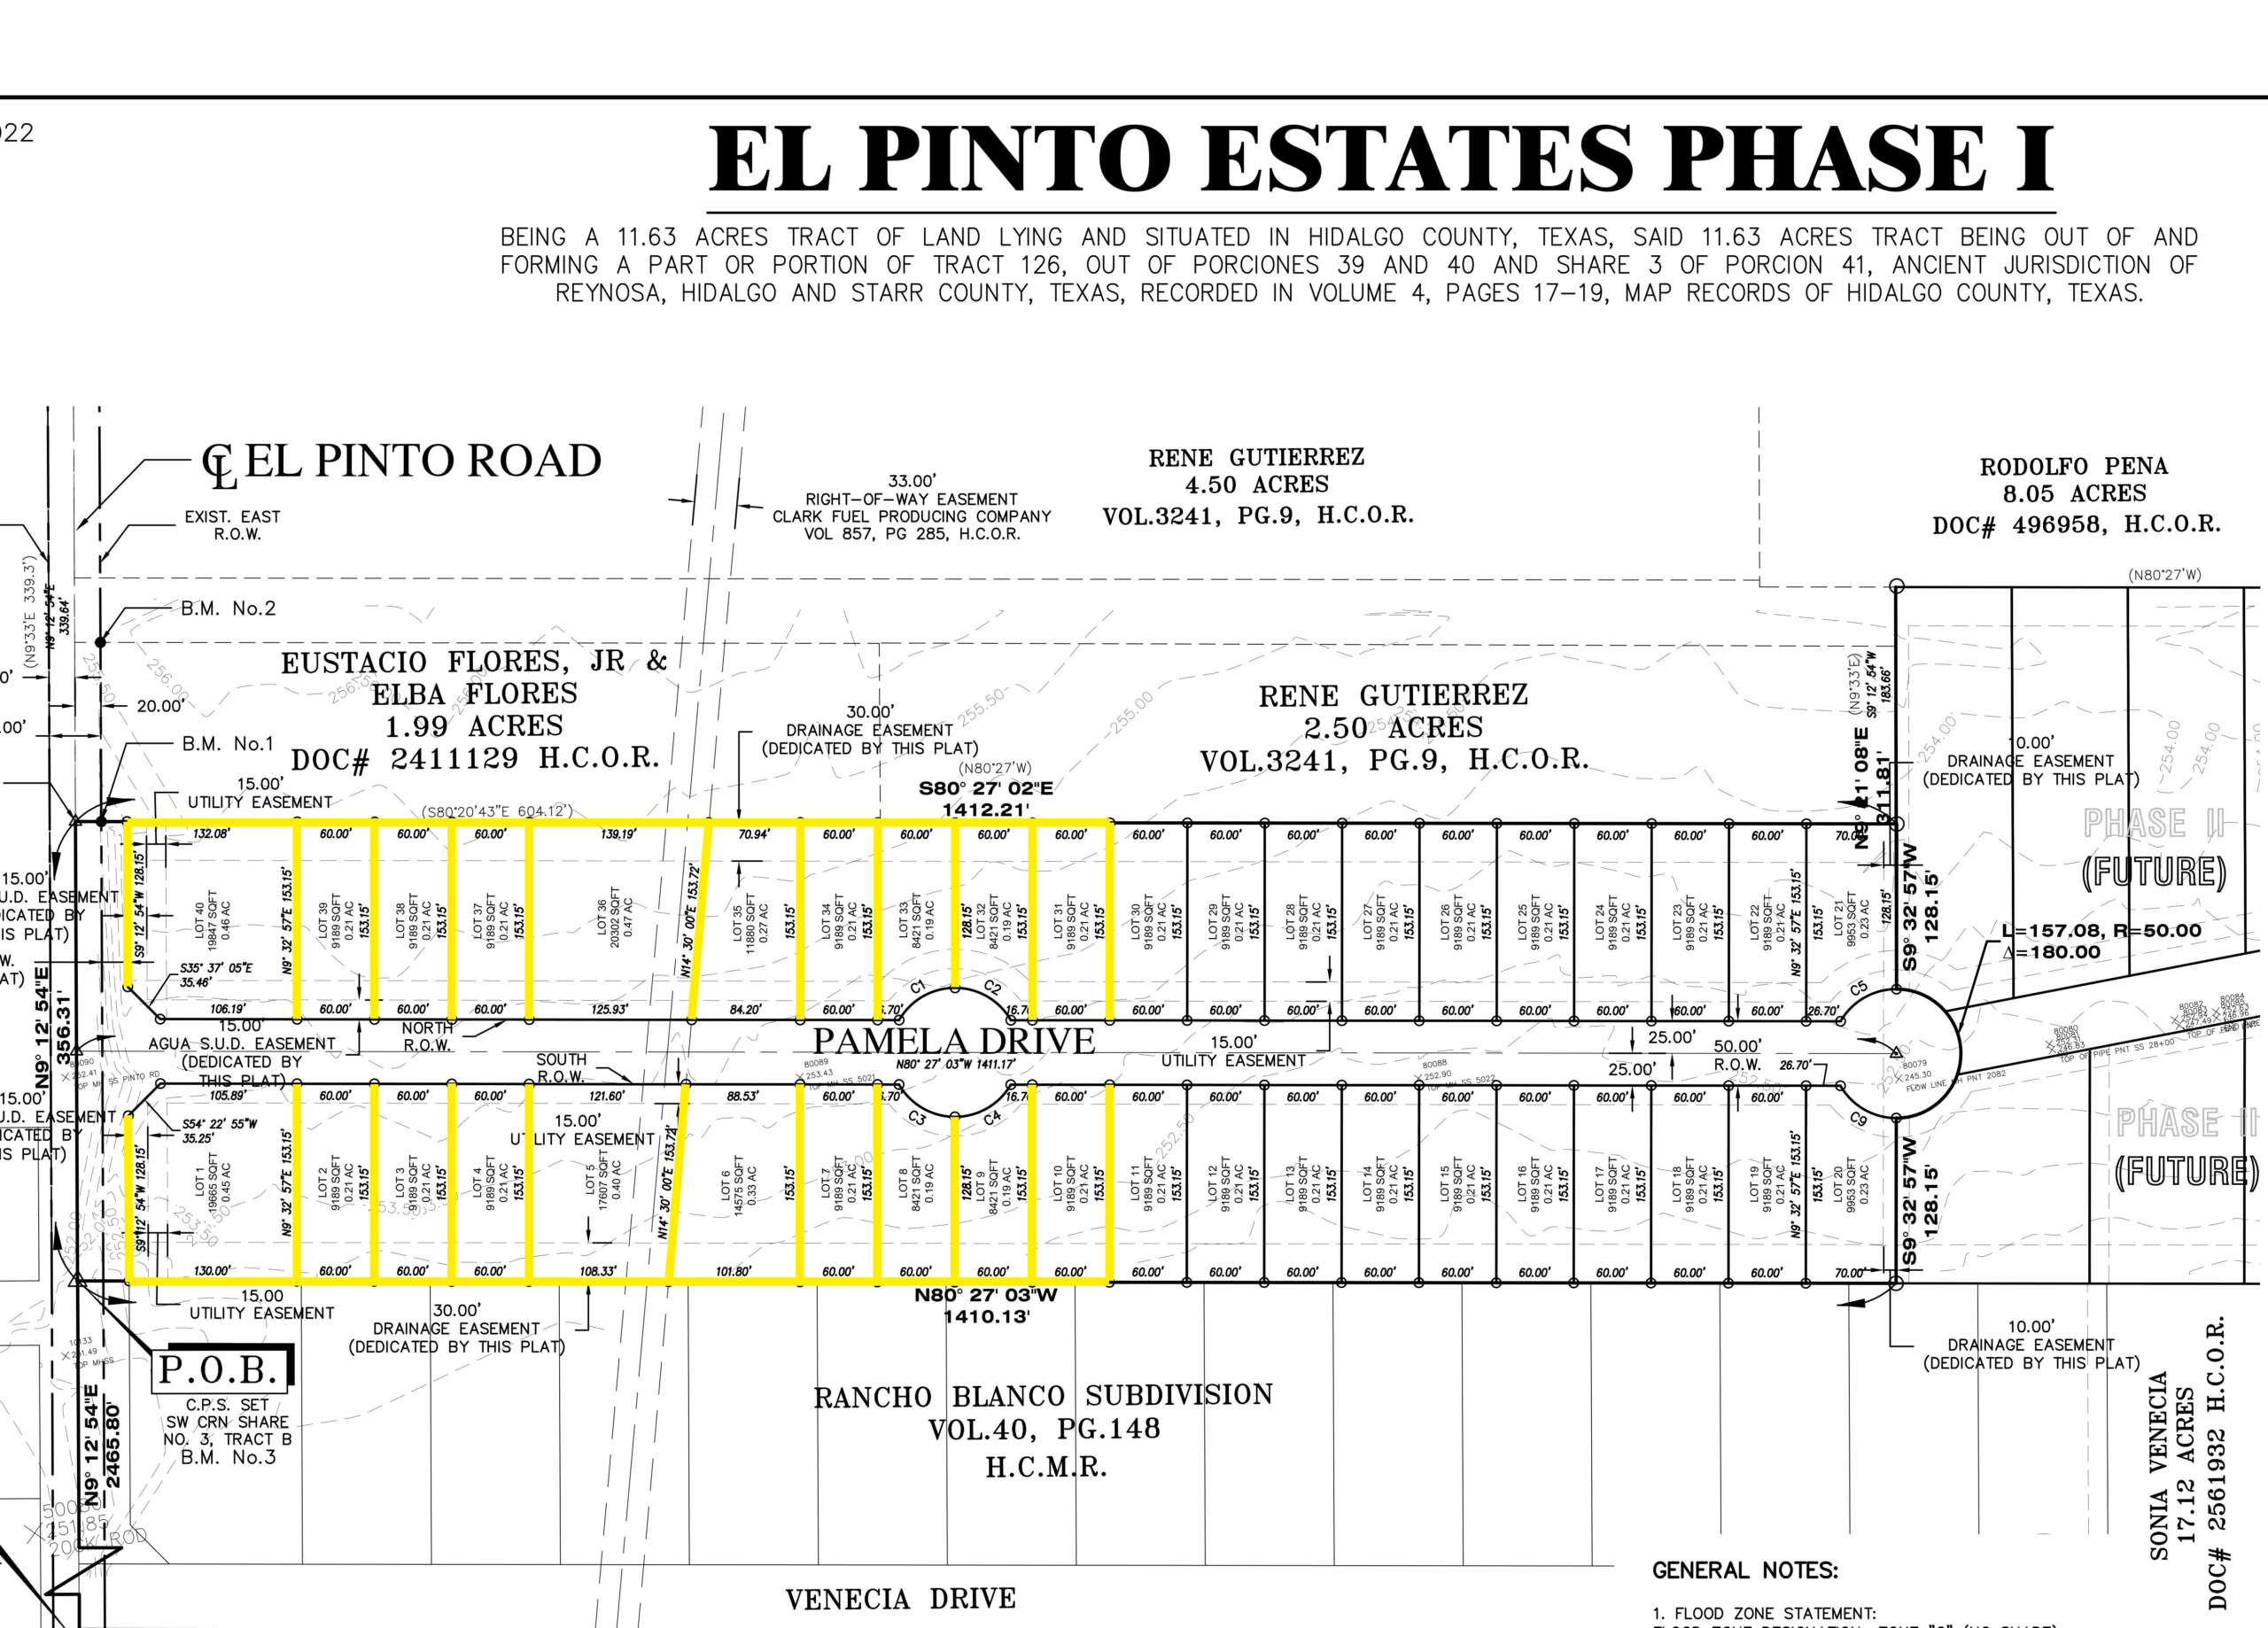 El Pinto Estates PH I